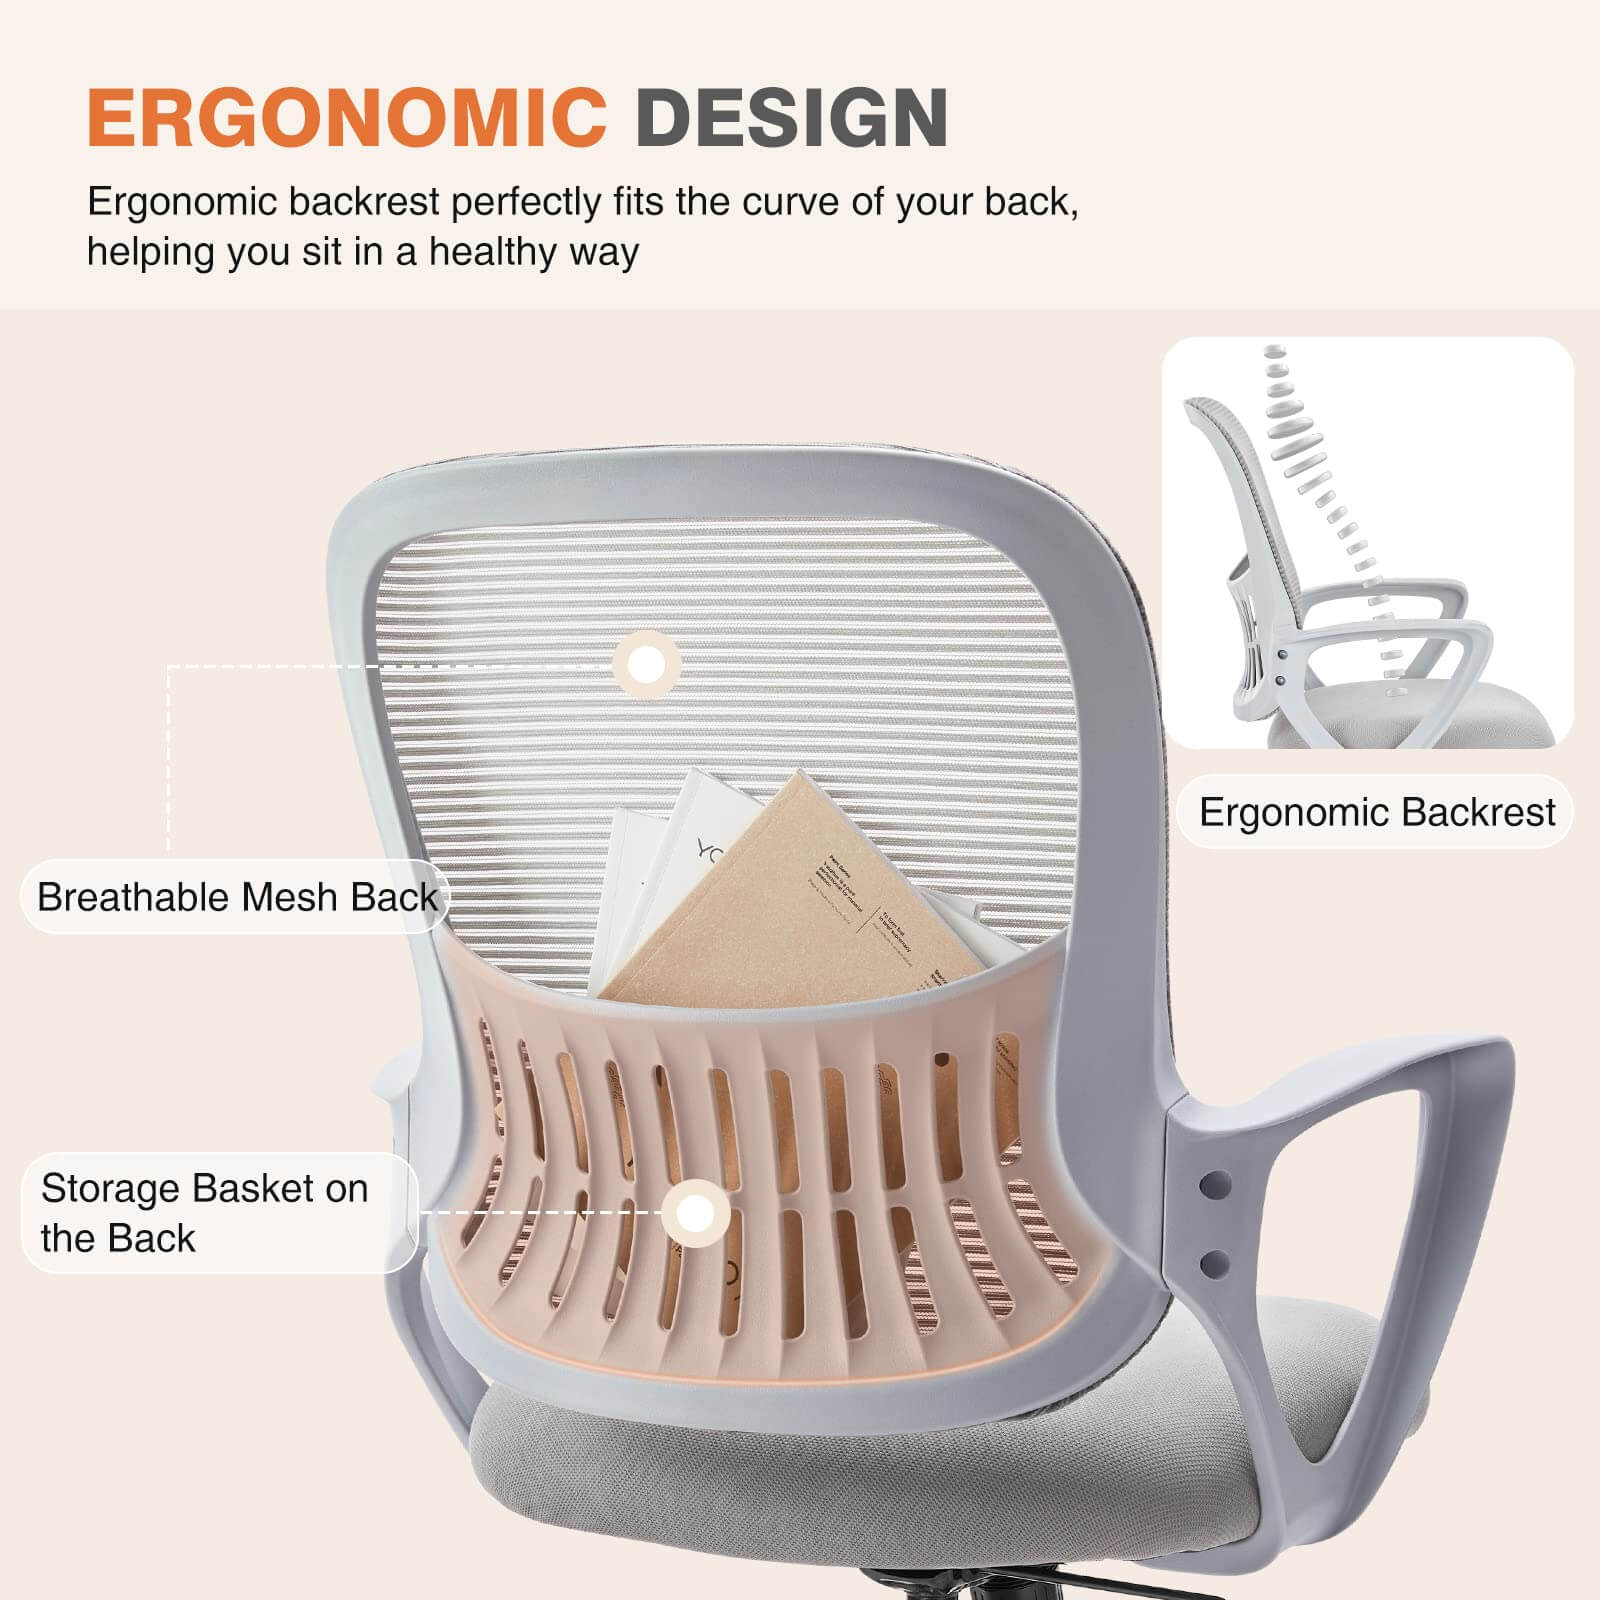 office-chair-ergonomic#Quantity_2 Chair#Color_Grey